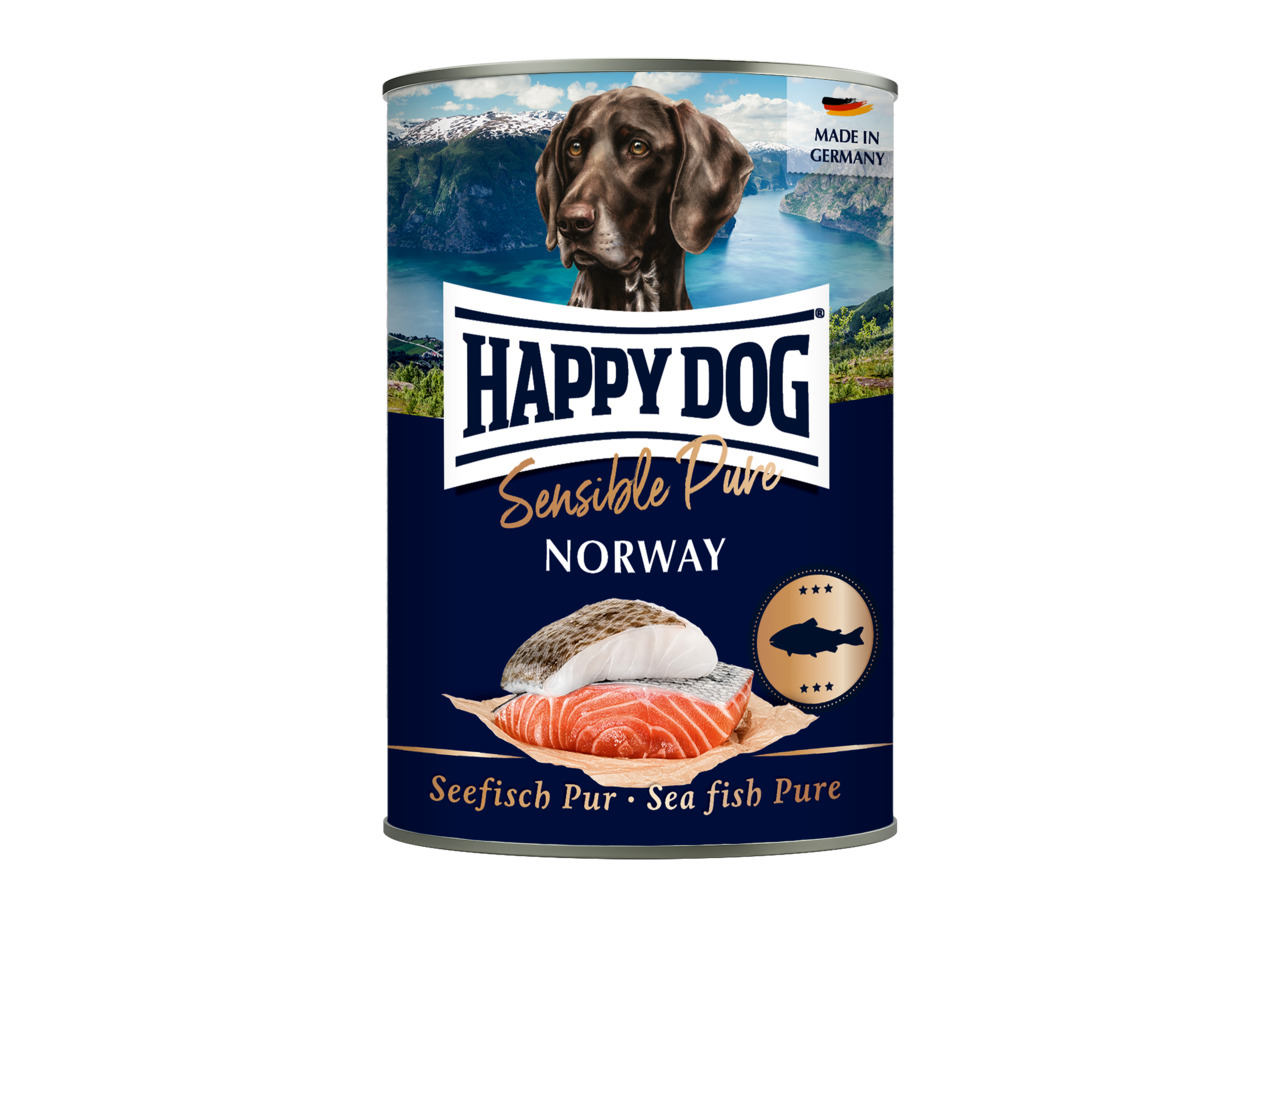 Sparpaket 6 x 400 g Happy Dog Sensible Pure Norway Seefisch Pur Hunde Nassfutter